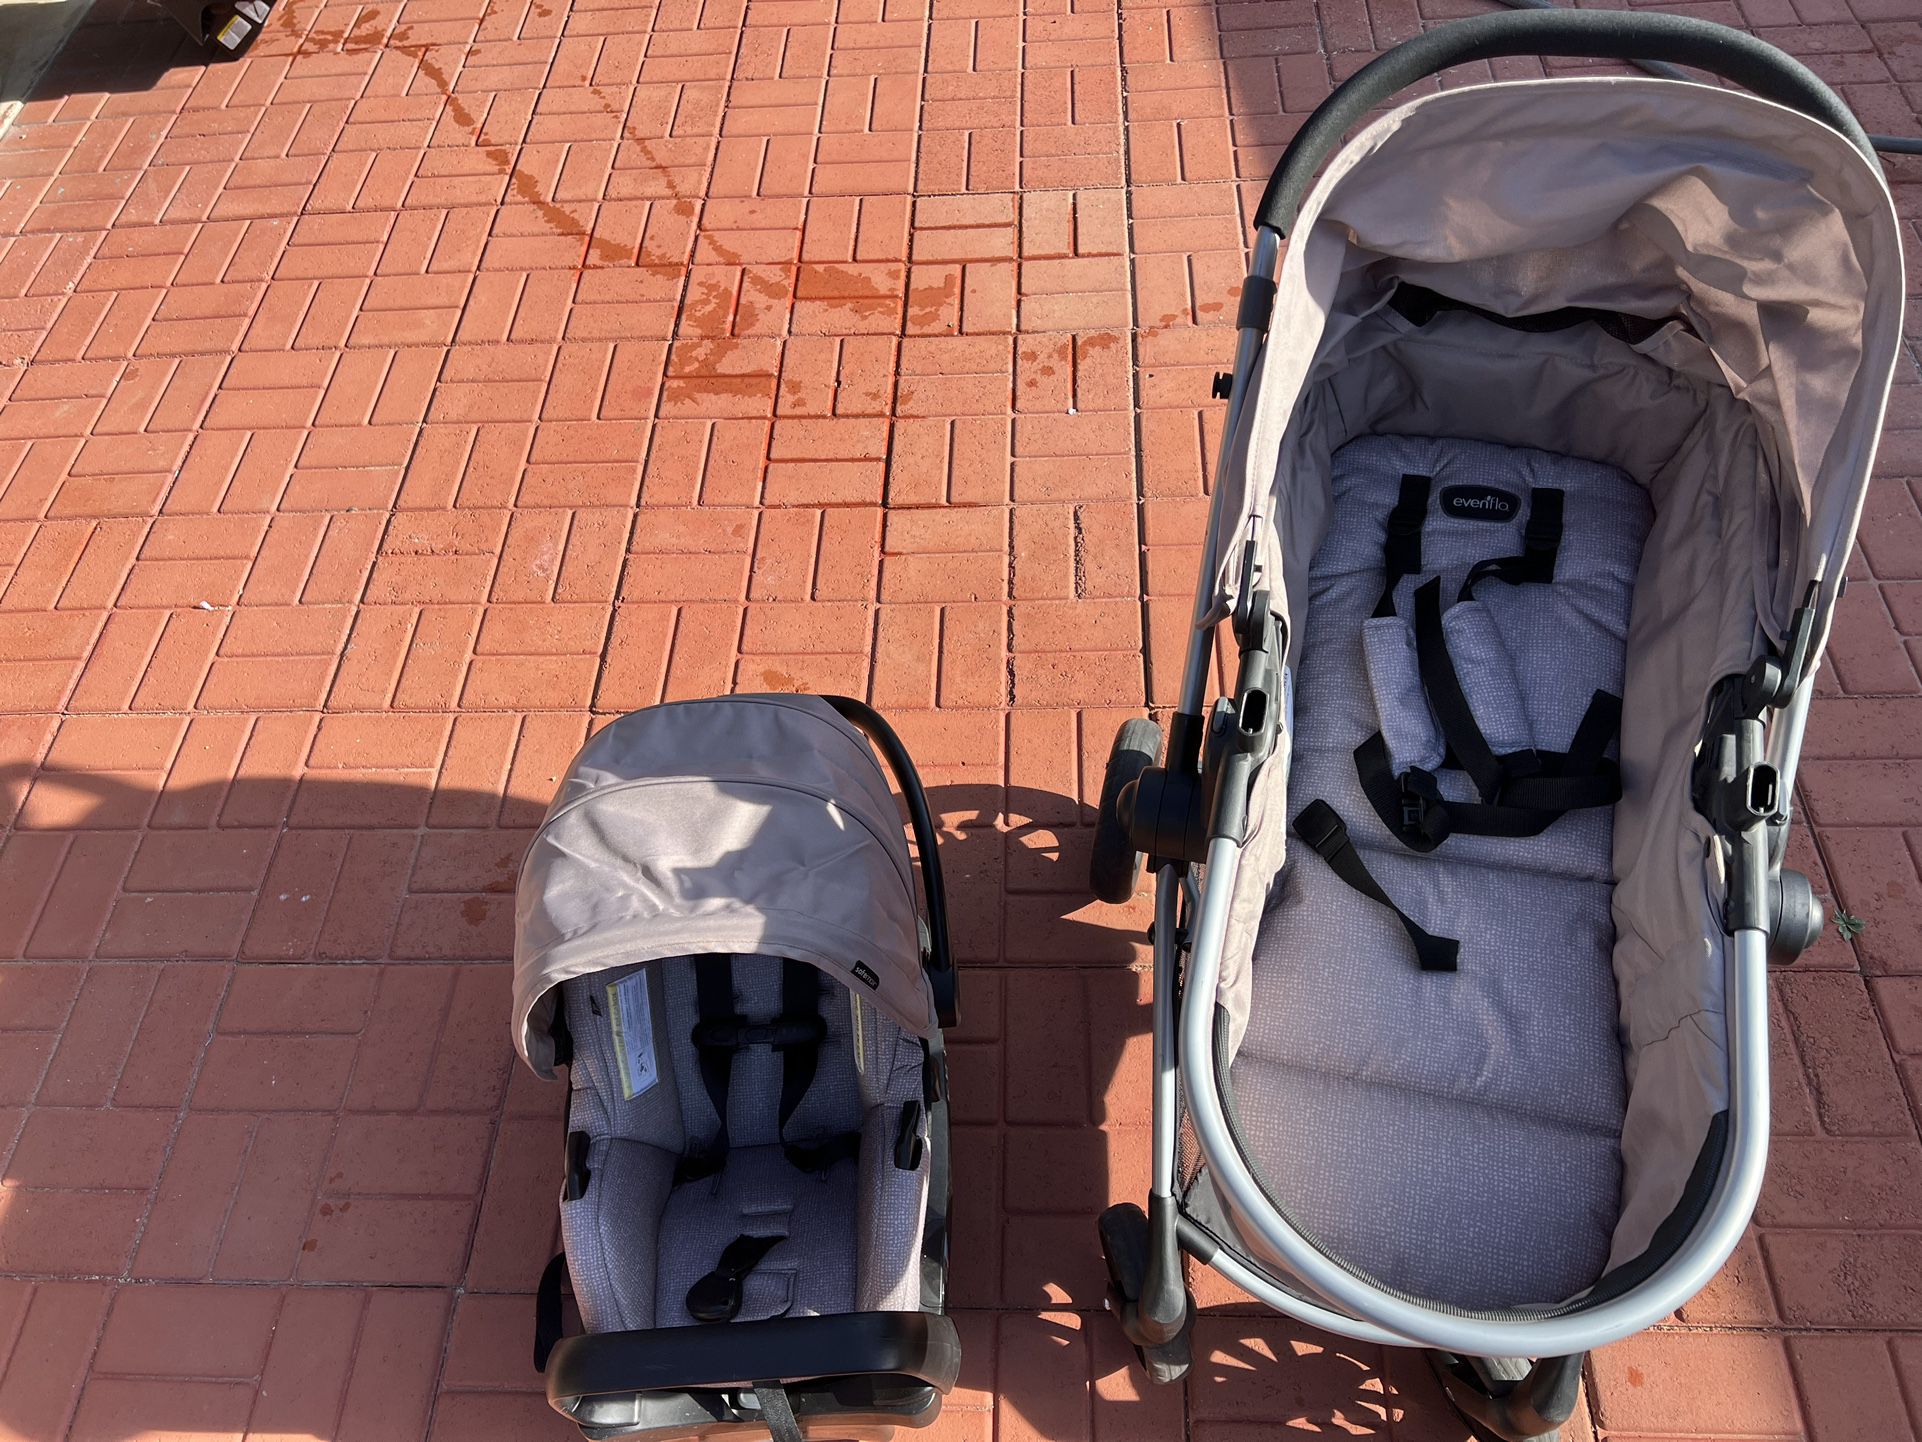 Evenflo Pivot Modular Travel System With Lifemax Infant Car Seat With Anti-rebound Bar